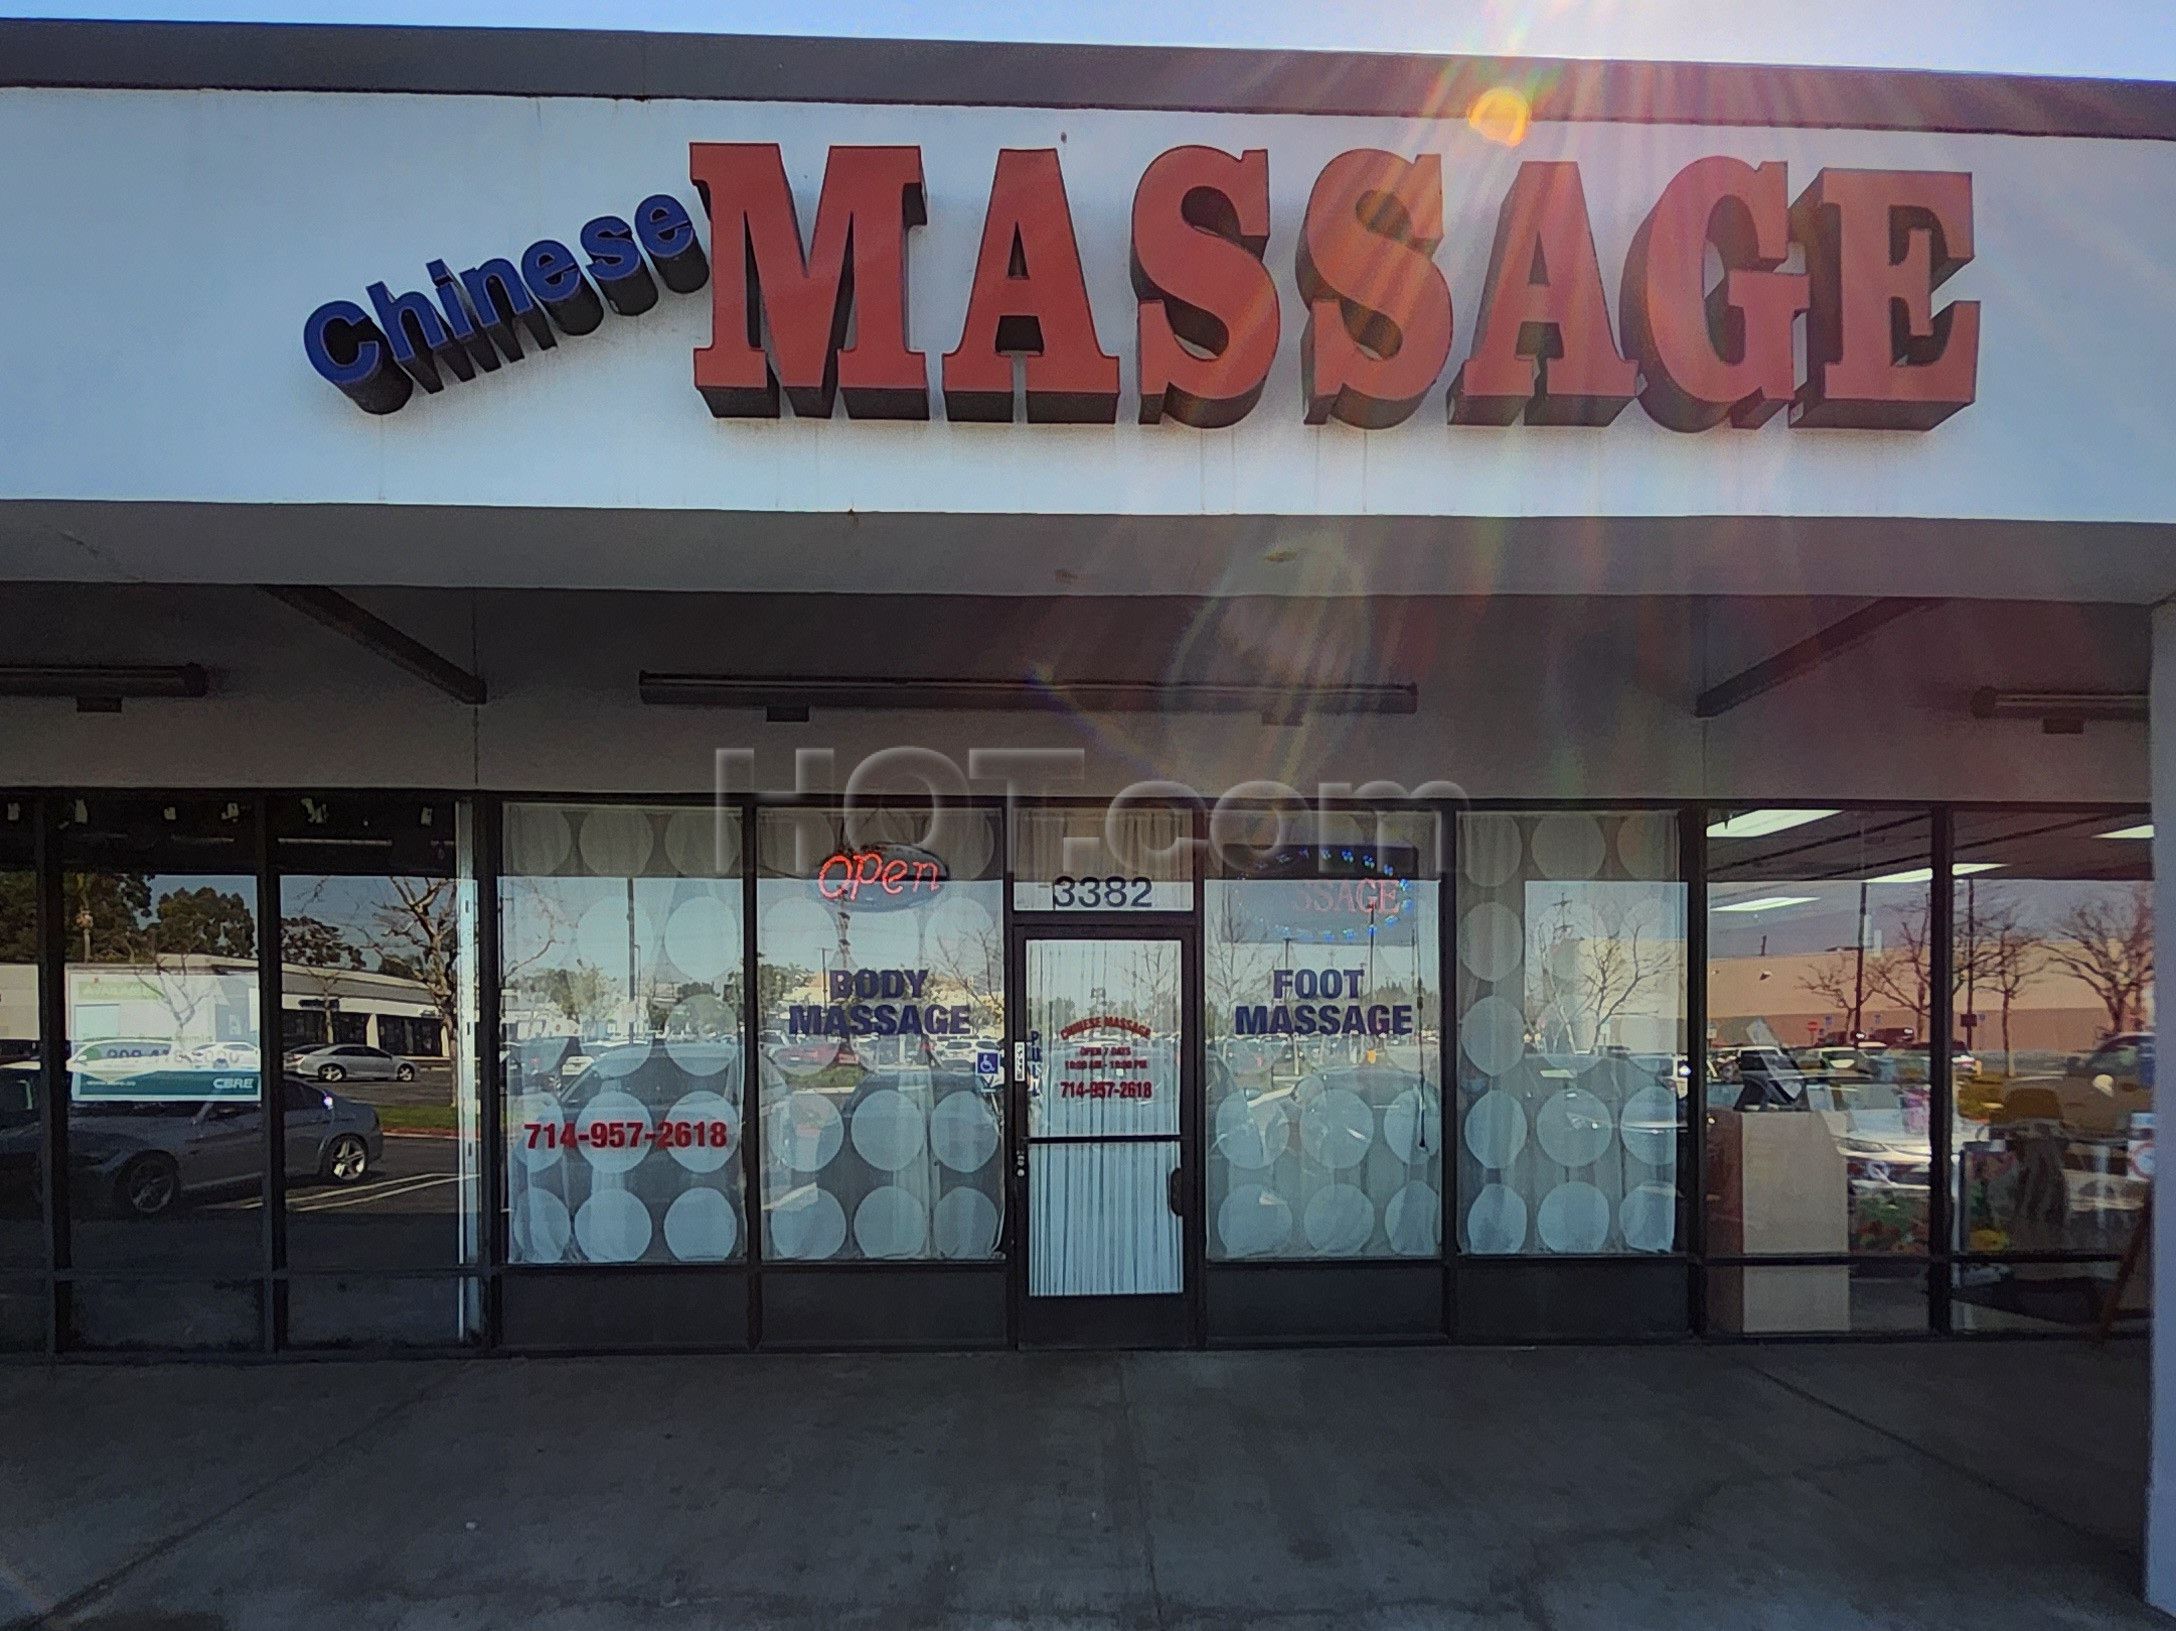 Santa Ana, California Chinese Massage